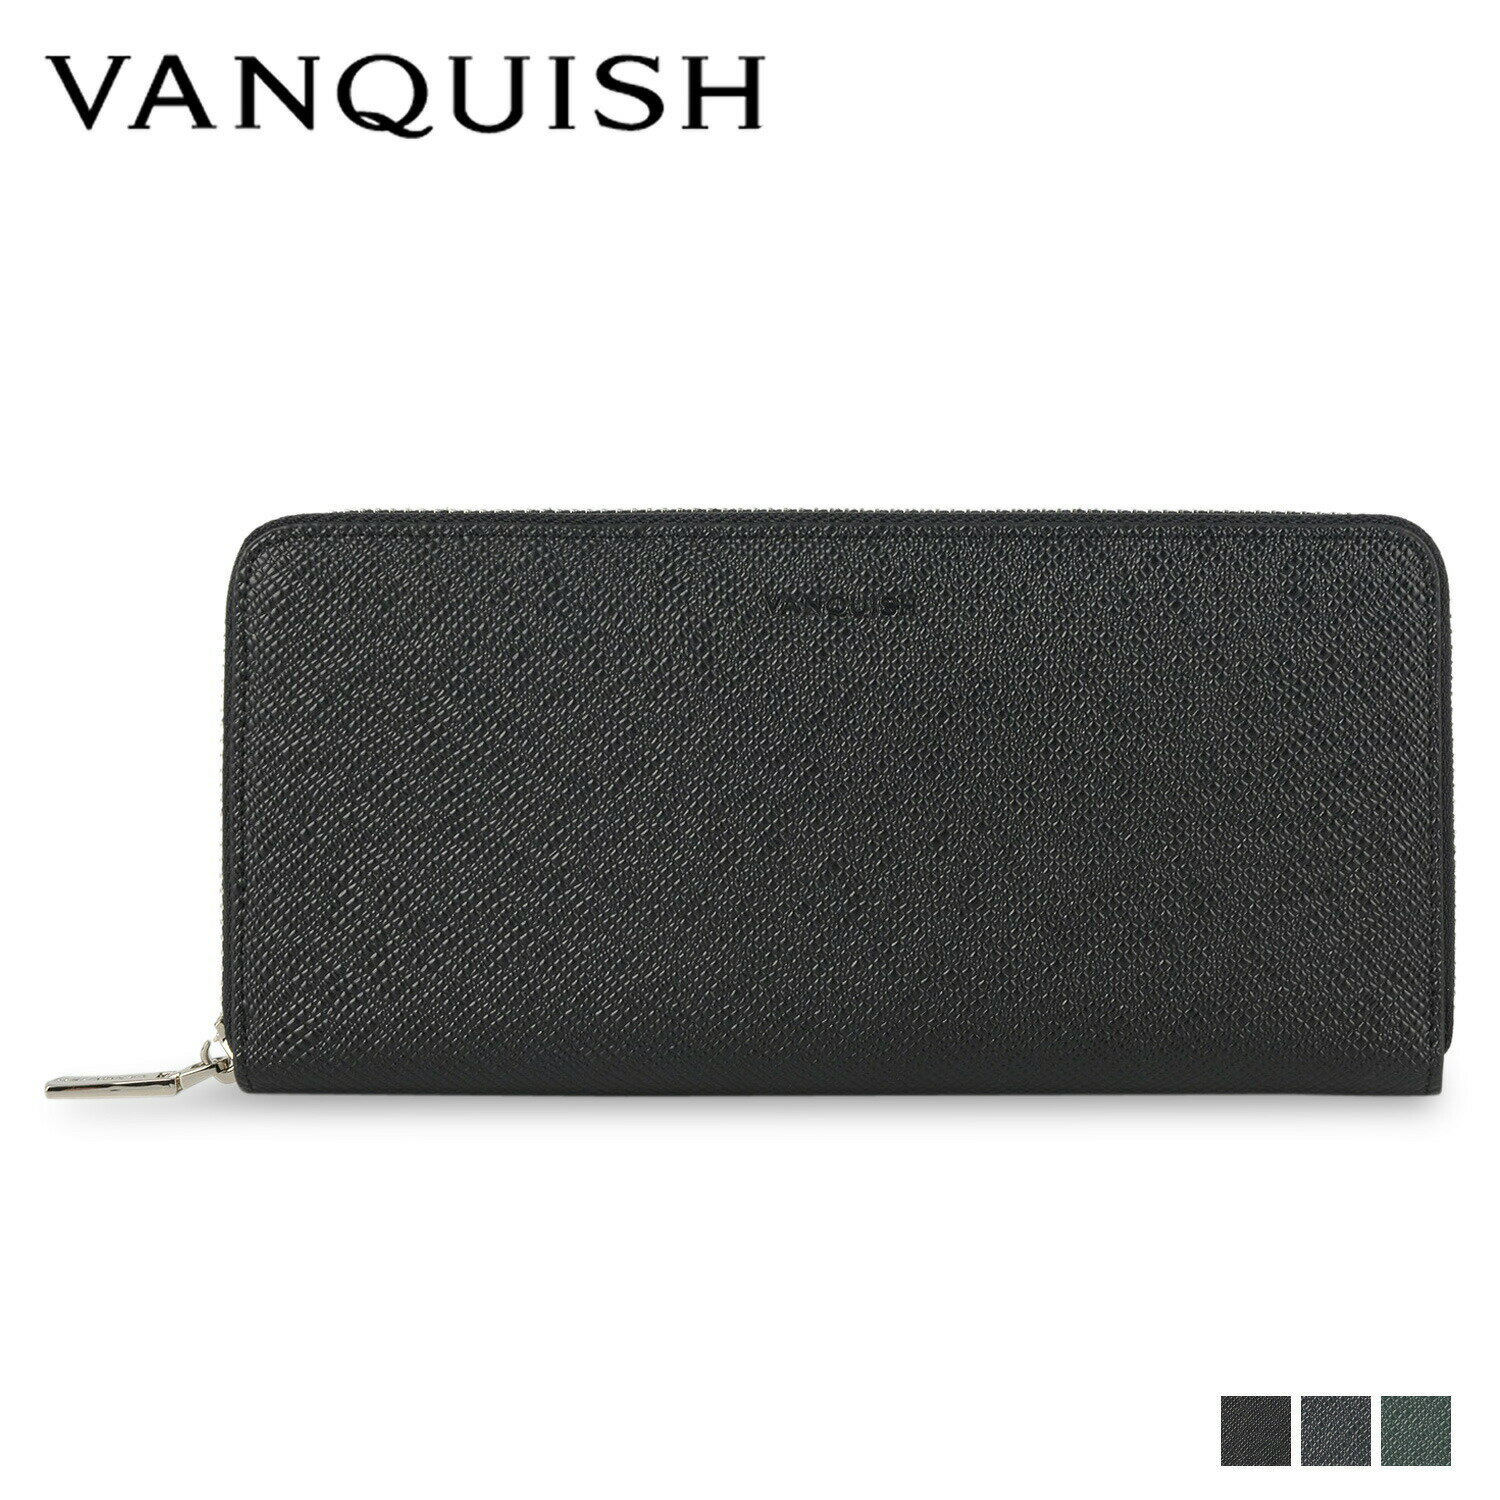 VANQUISH LONG WALLET ヴァンキッシュ 長財布 メンズ ラウンドファスナー 本革 ブラック ネイビー ダーク グリーン 黒 VQM-43270